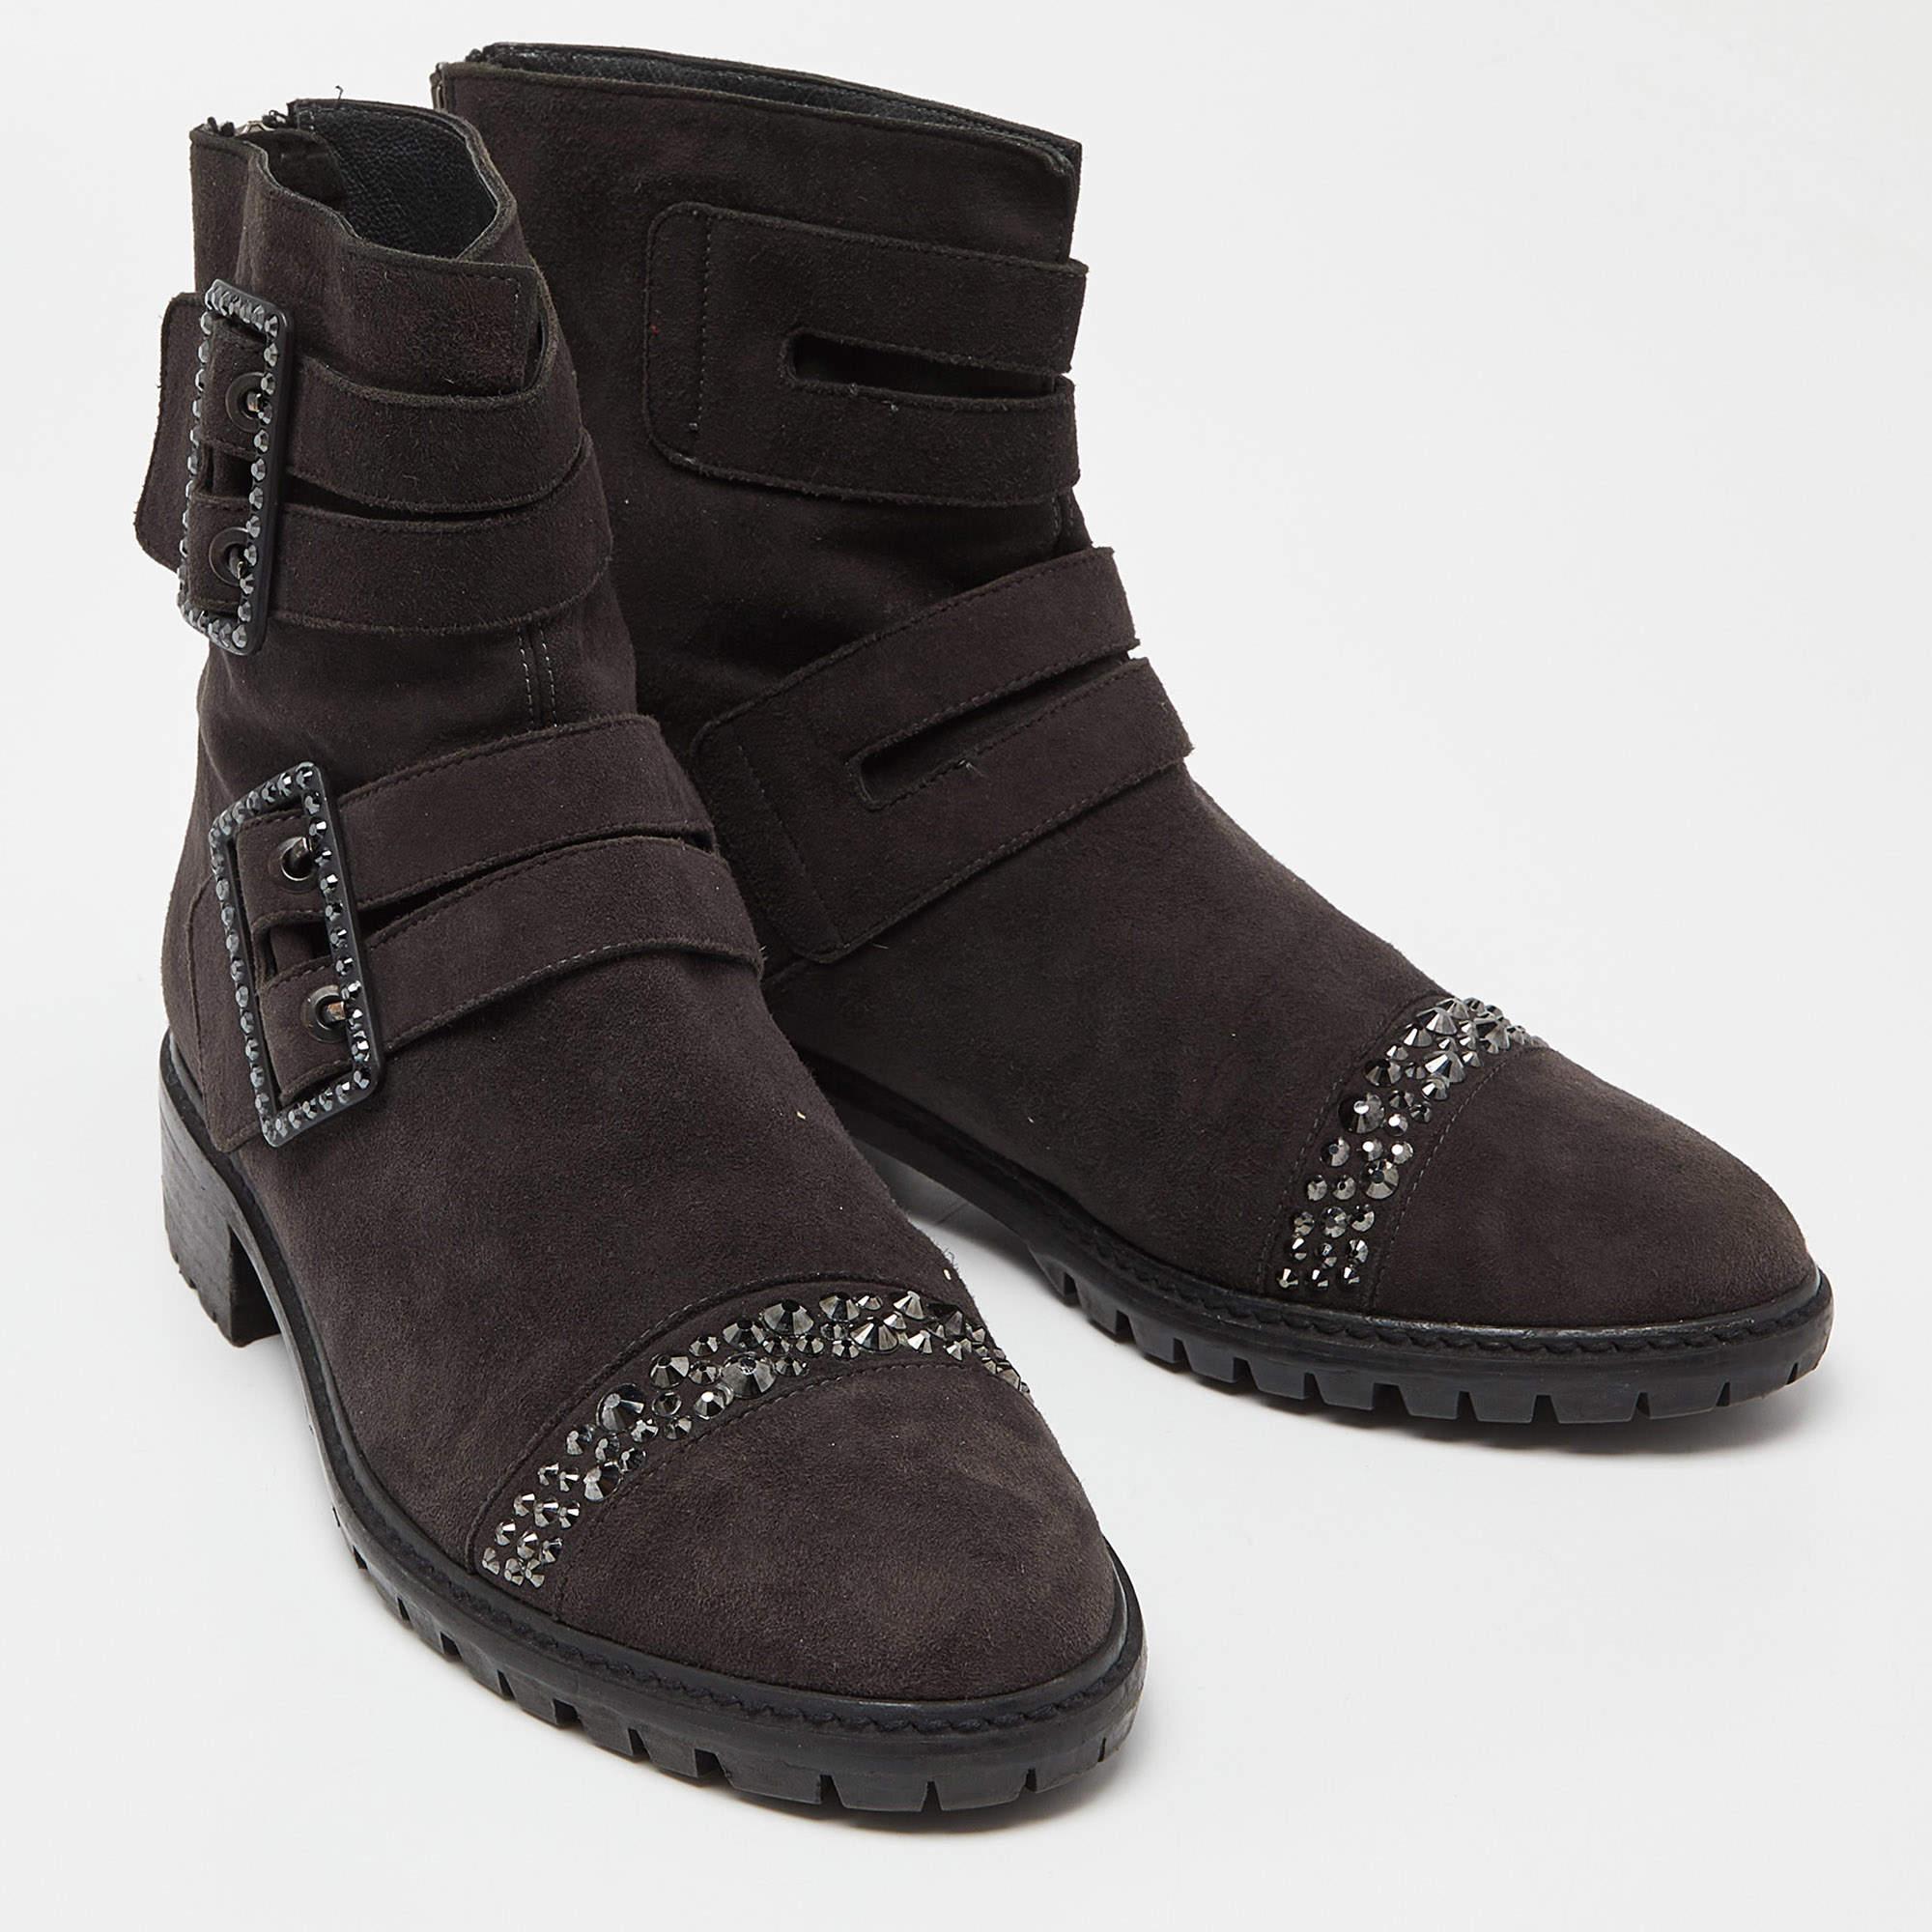 Stuart Weitzman Black Suede Crystal Embellished Ankle Length Boots Size 37.5 1